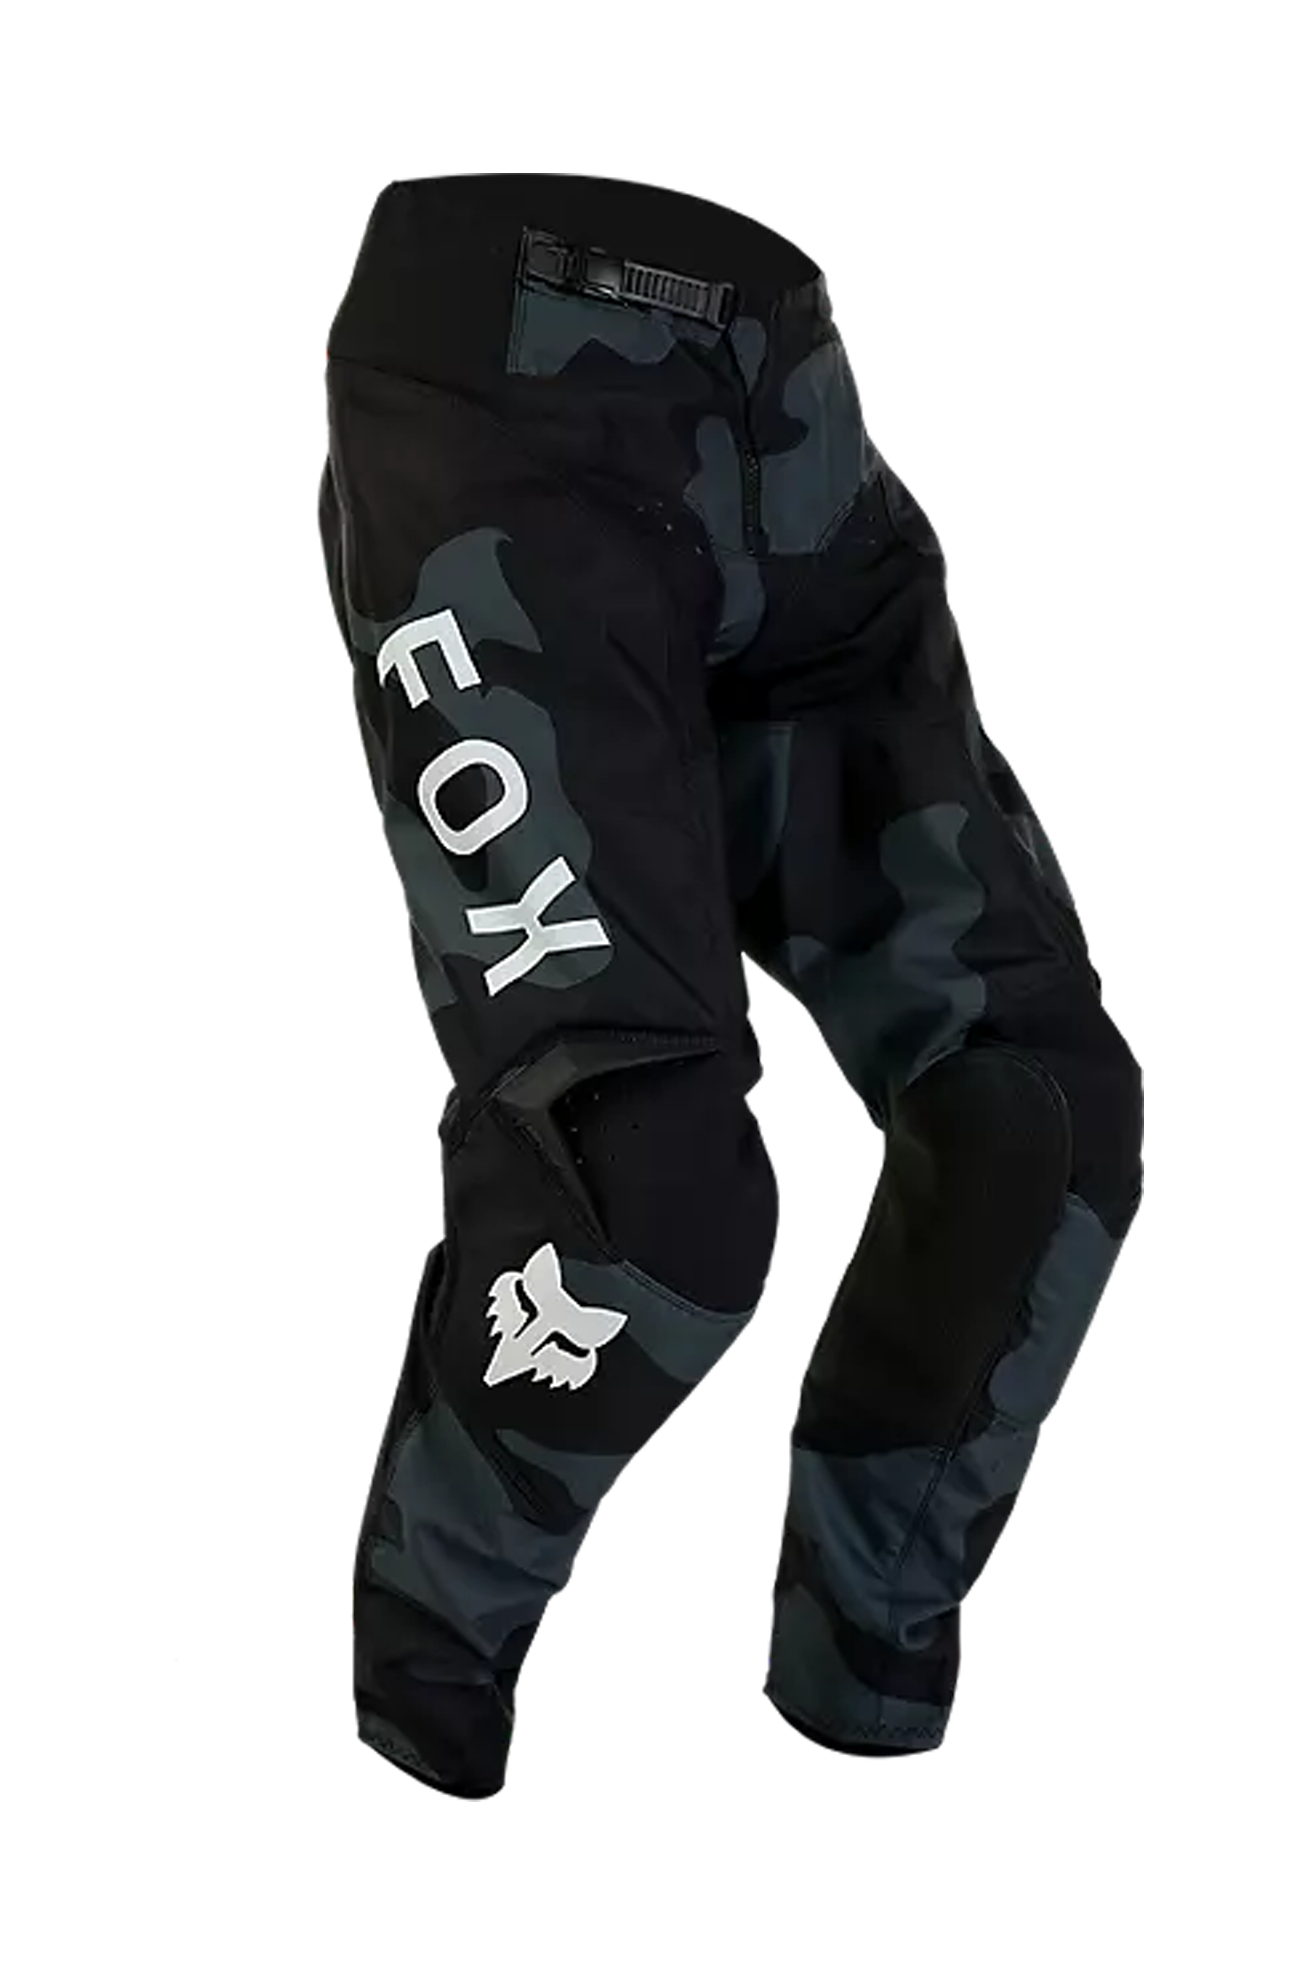 Pantalon Cross FOX Racing 180Bnkr Noir Camouflage -